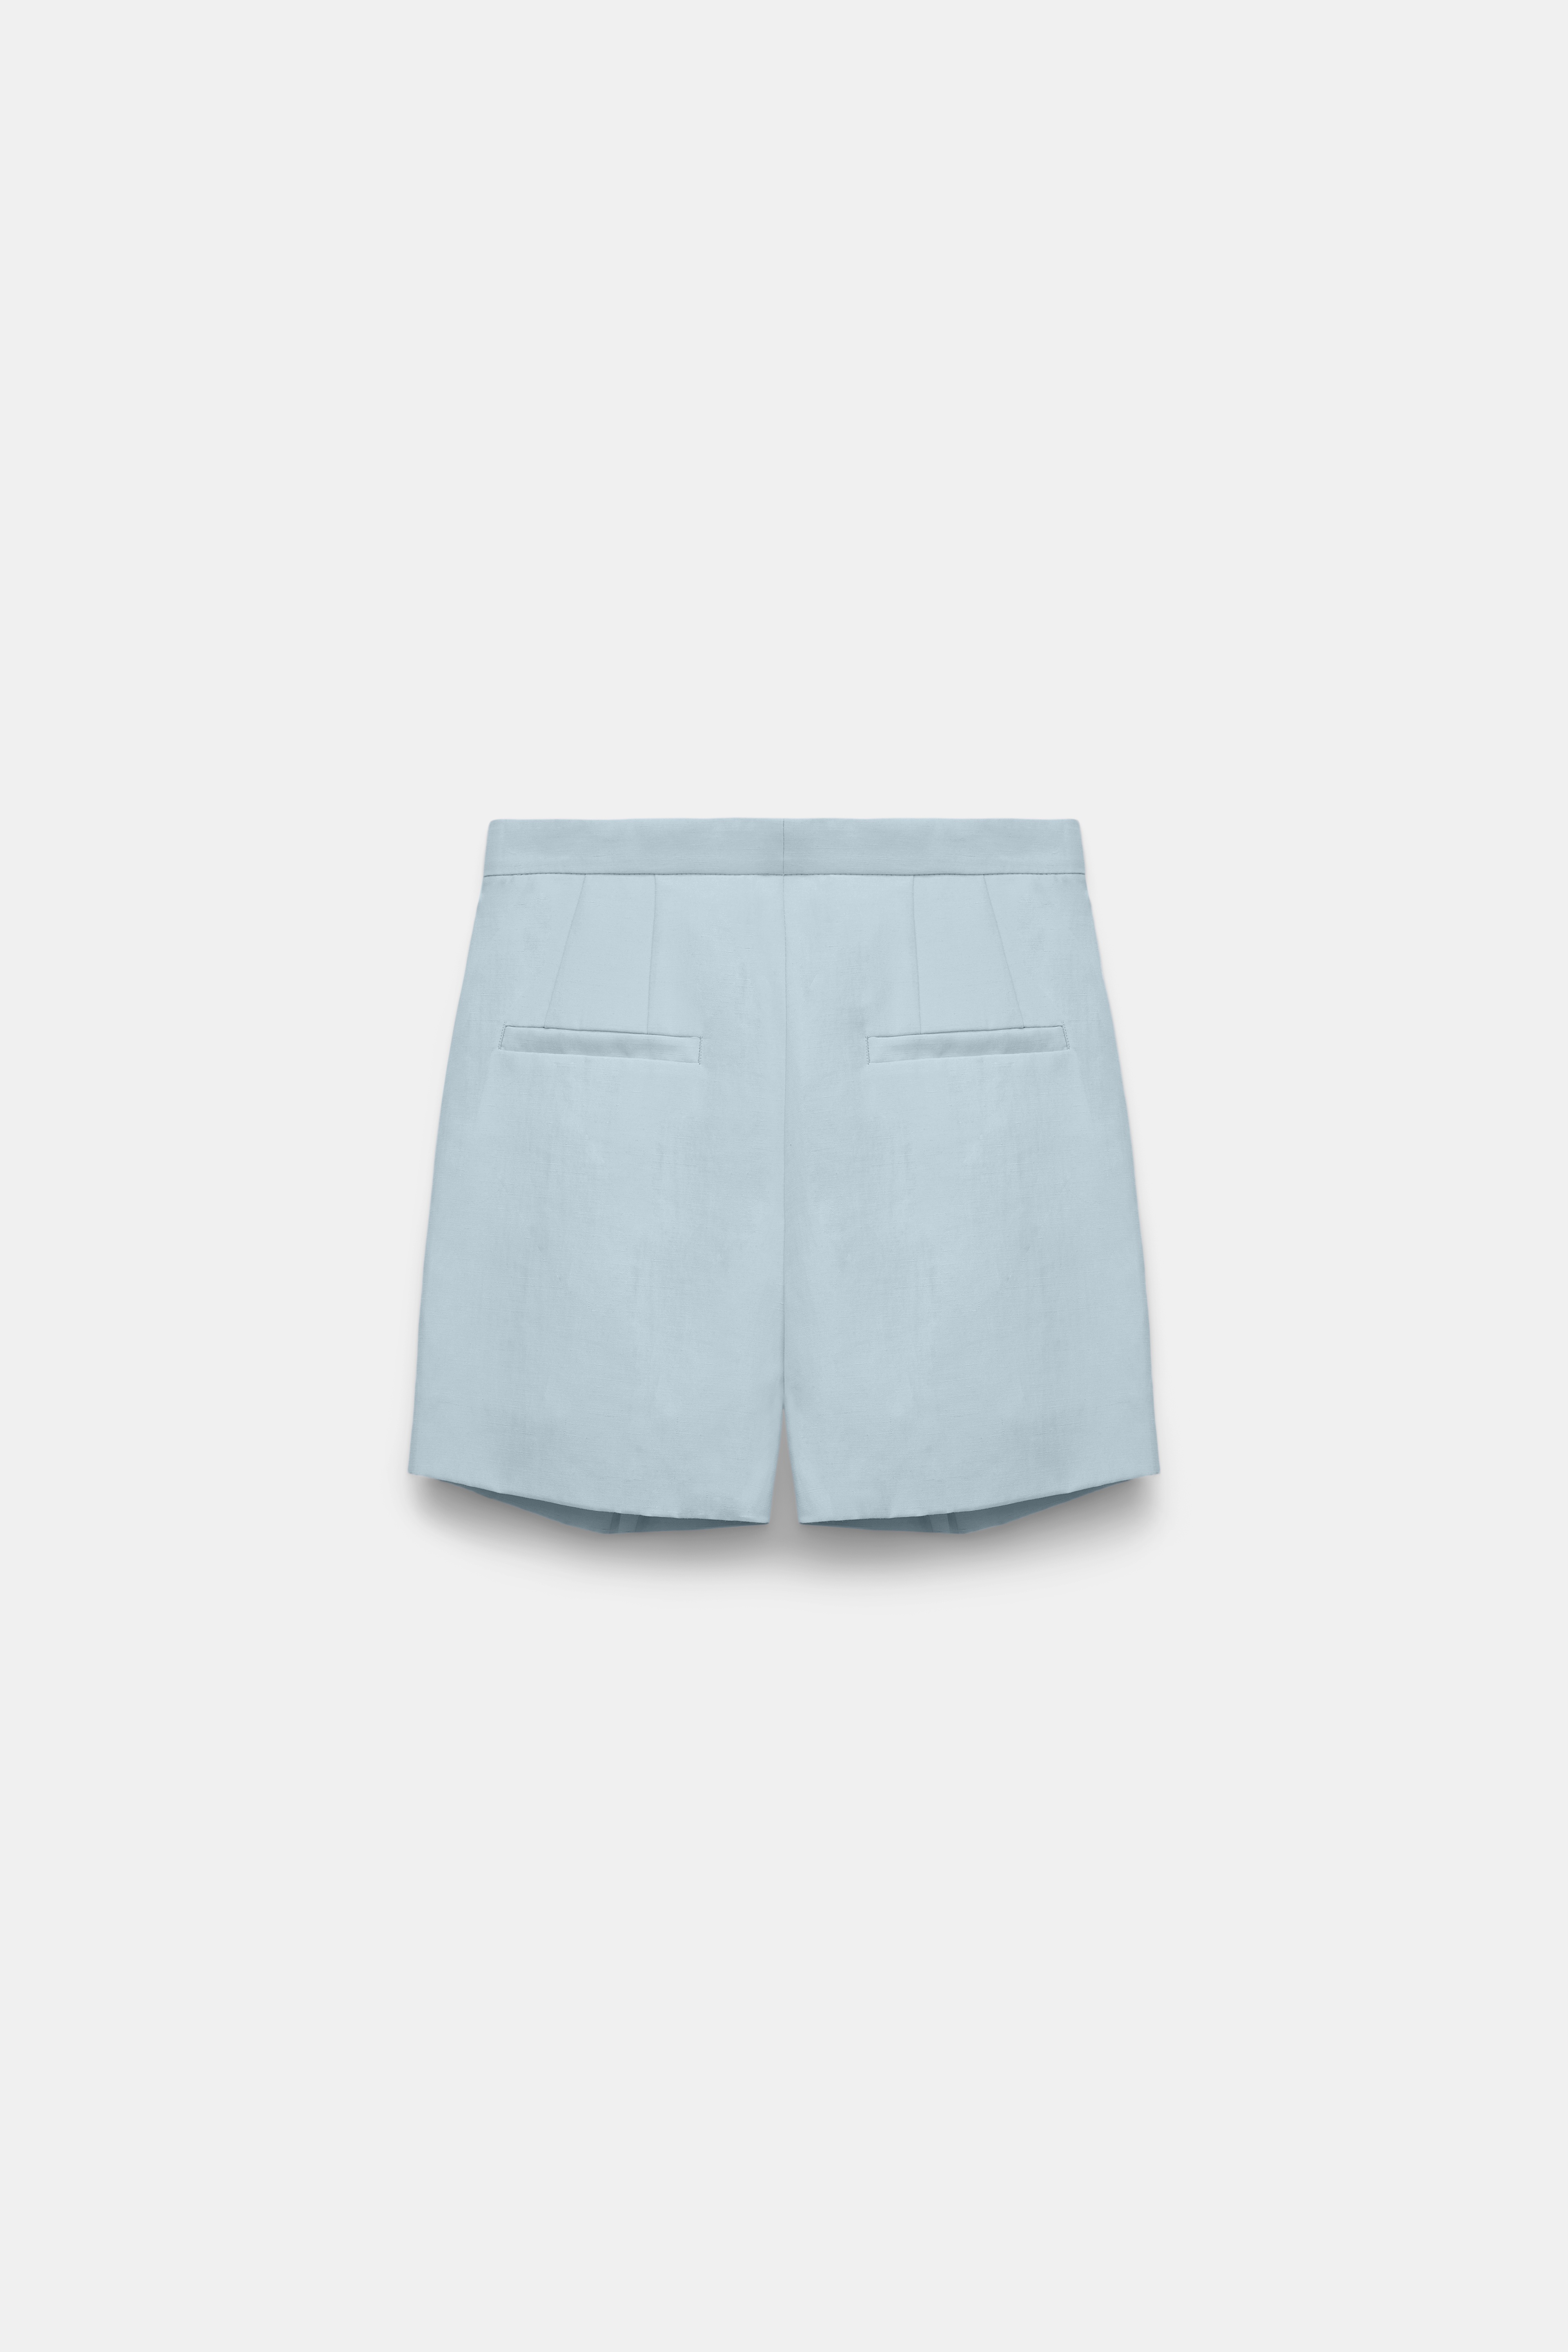 SUMMER CRUISE shorts - 6